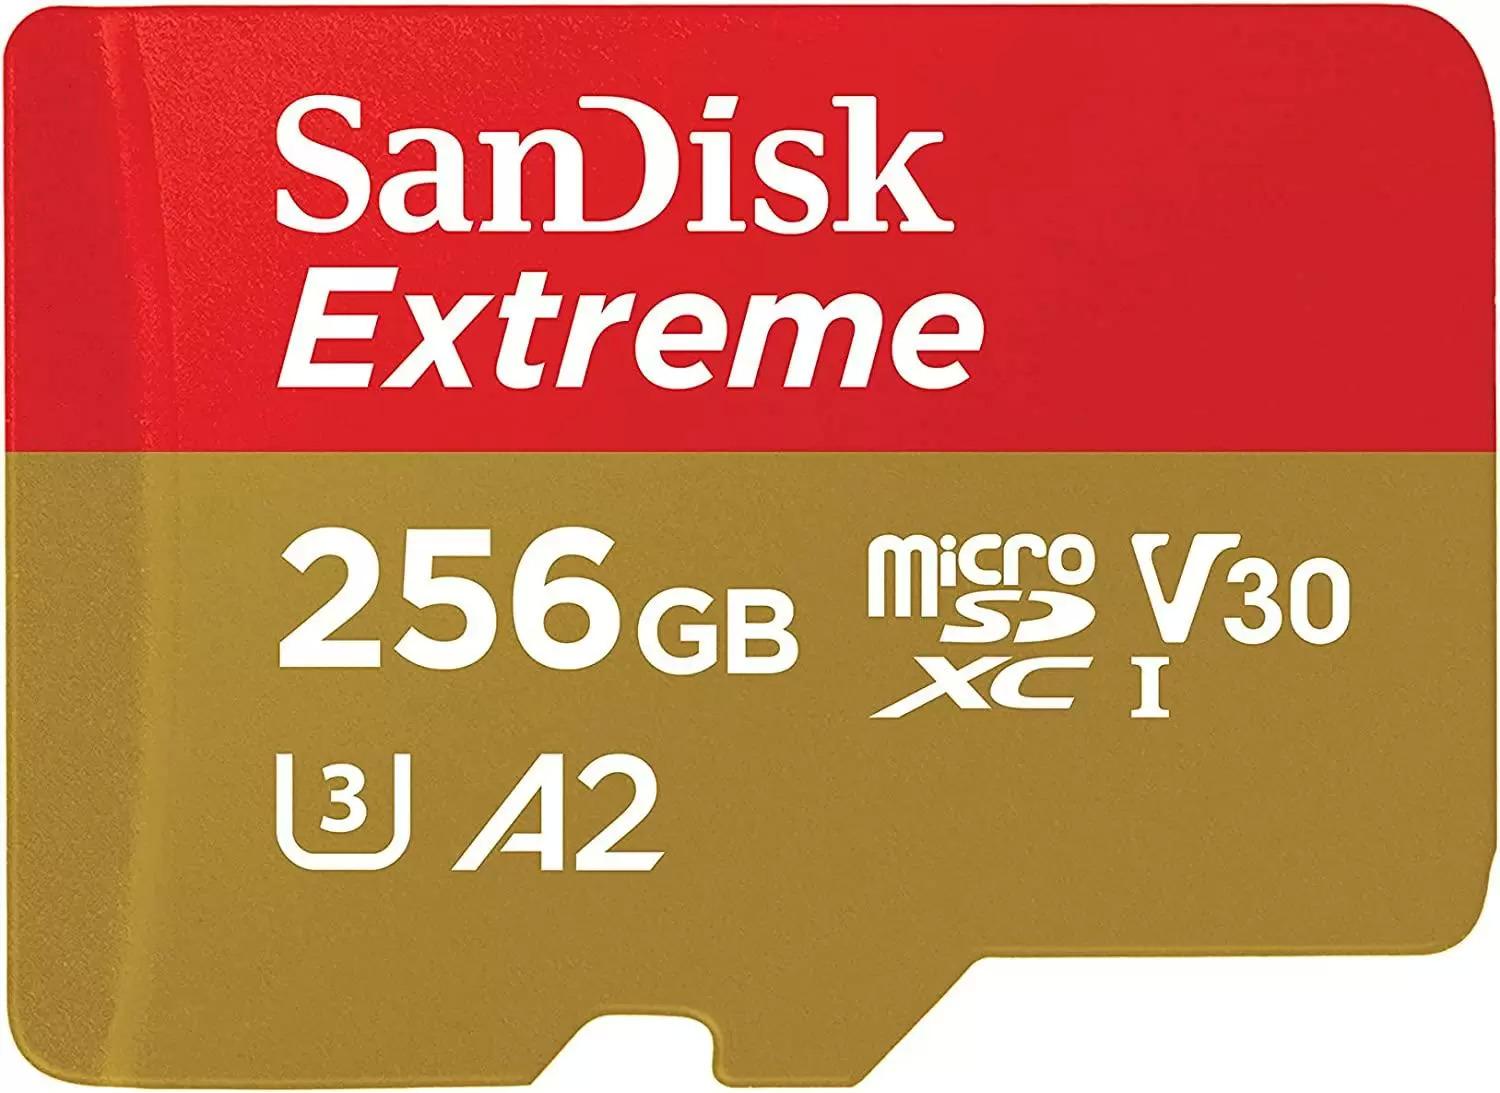 256GB SanDisk Extreme microSDXC UHS-I Memory Card for $21.99